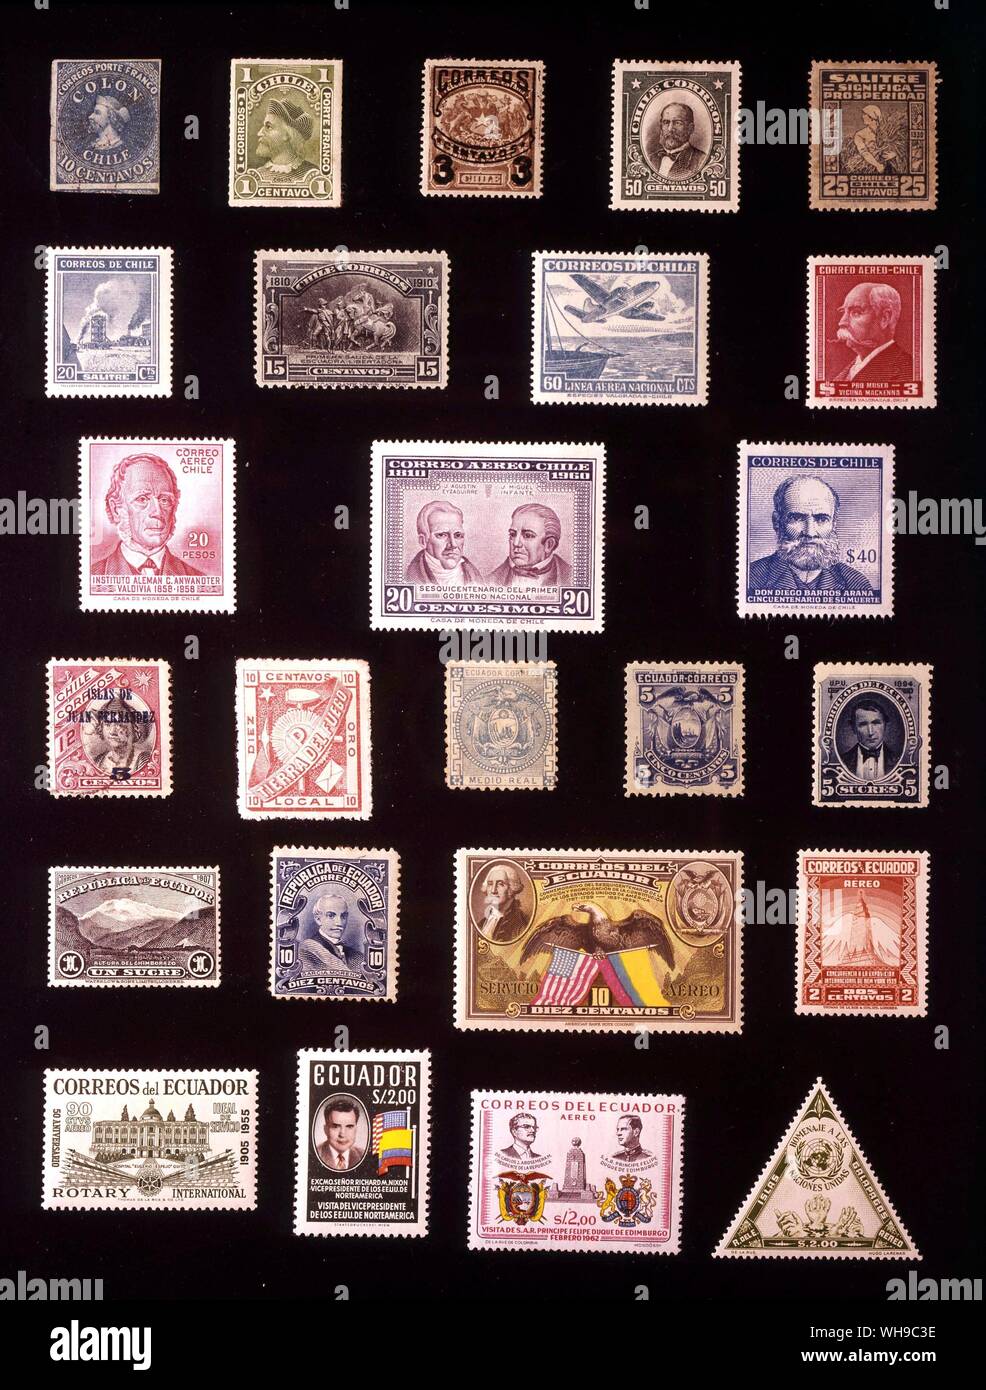 AMERICA - CHILE AND ECUADOR: (left to right) 1. Chile, 10 centavos, 1853, 2. Chile, 1 centavo, 1900, 3. Chile, 3 centavos, 1904, 4. Chile, 50 centavos, 1911, 5. Chile, 25 centavos, 1930, 6. Chile, 20 cewntavos, 1938, 7. Chile, 15 centavos, 1910, 8. Chile, 60 centavos, 1950, 9. Chile, 3 pesos, 1949, 10. Chile, 20 pesos, 1958, 11. Chile, 20 centesimos, 1964, 12. Chile, 40 pesos, 1959, 13. Juan Fernandez, 5 centavos, 1910, 14. Tierra del Fuego, 10 centavos, 1891, 15. Ecuador, 0.5 real, 1872, 16. Ecuador, 5 centavos, 1881, 17. Ecuador, 5 sucres, 1894, 18. Ecuador, 1 sucre, 1908, 19. Ecuador, 10 Stock Photo